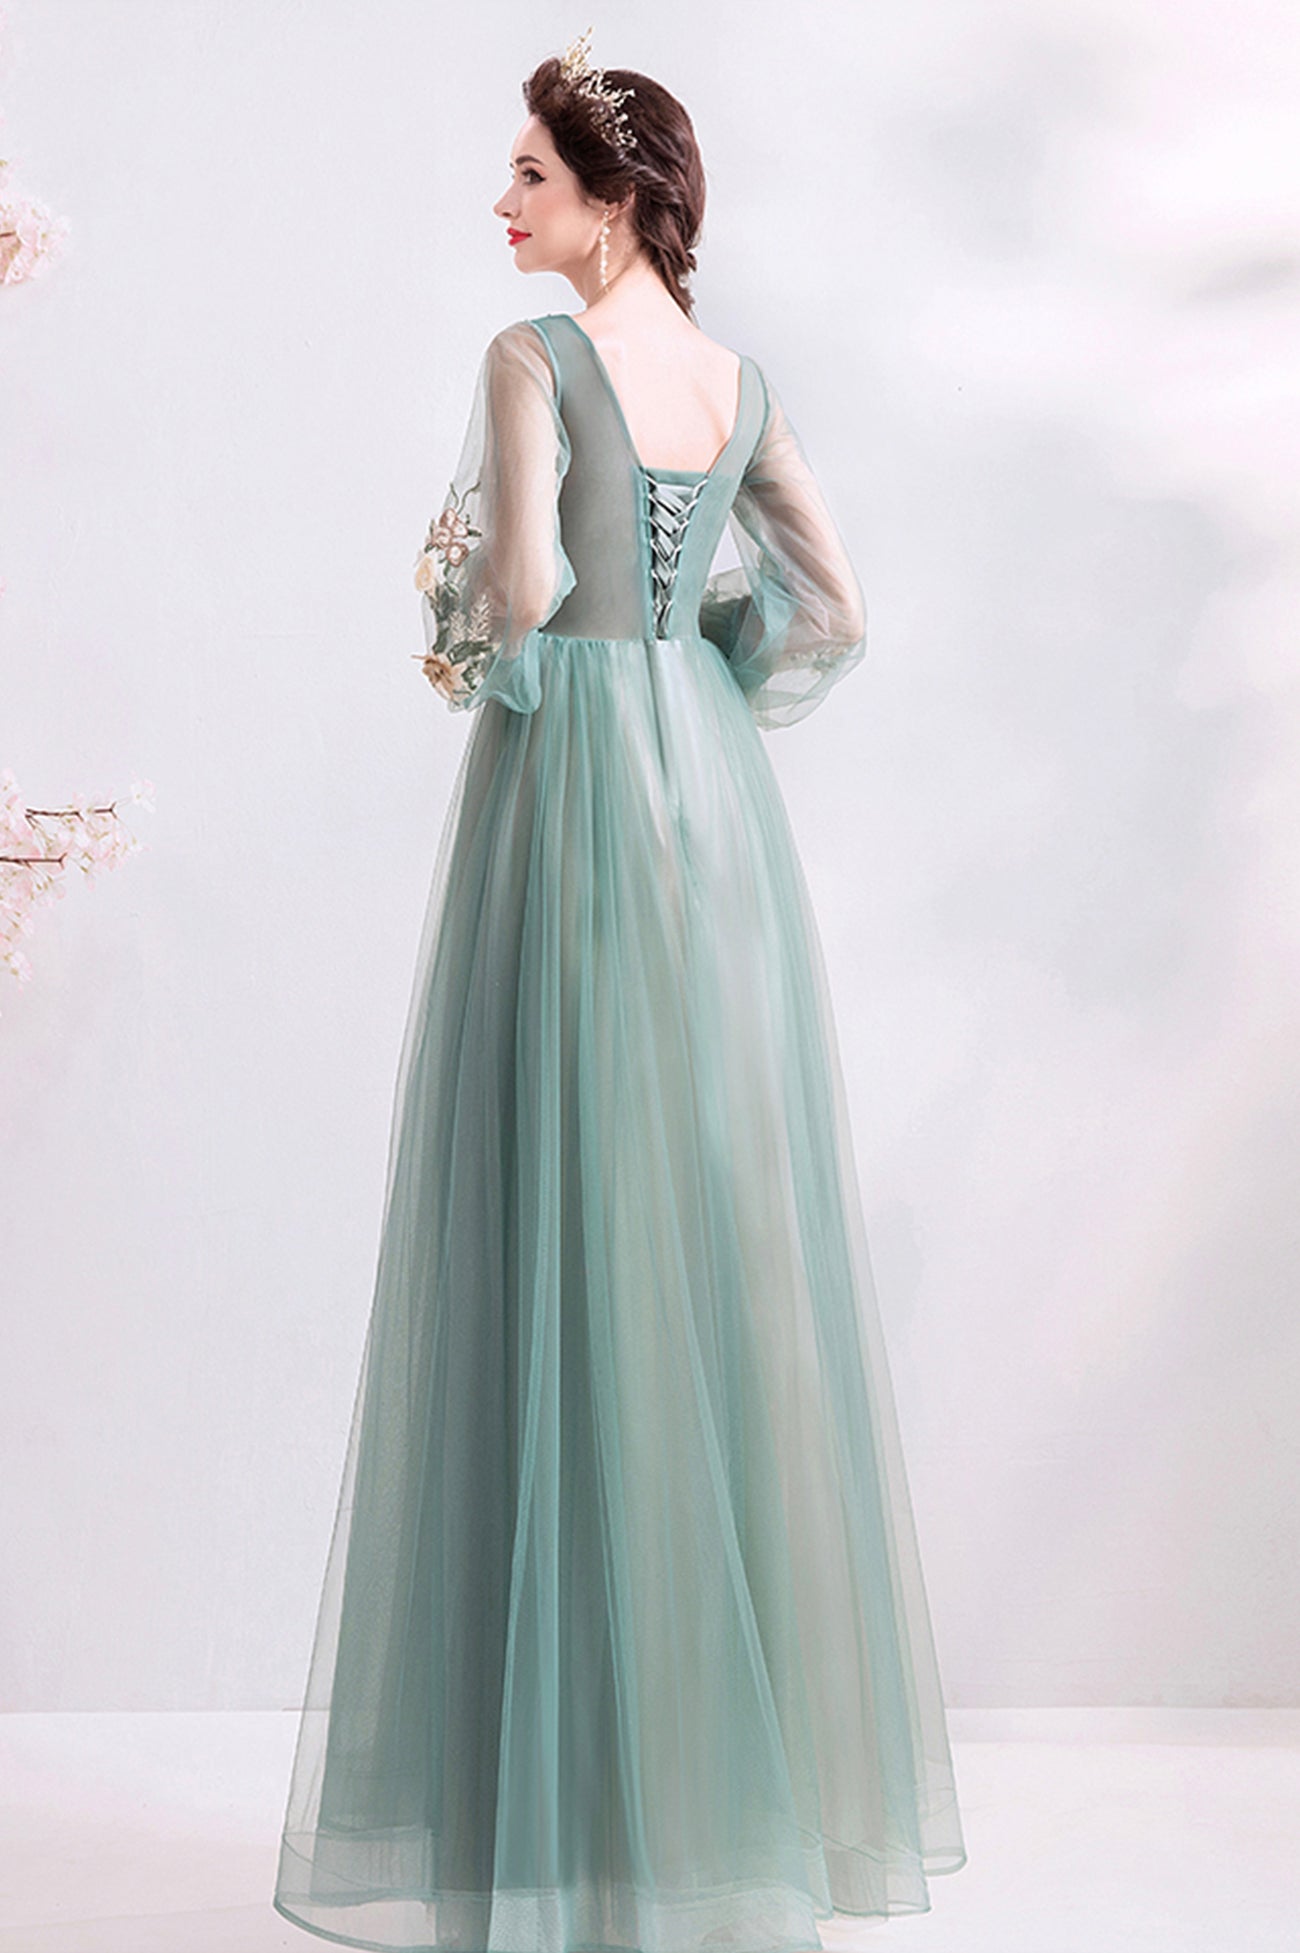 Green Scoop Neckline Lace Evening Dress, A-Line Long Sleeve Prom Dress